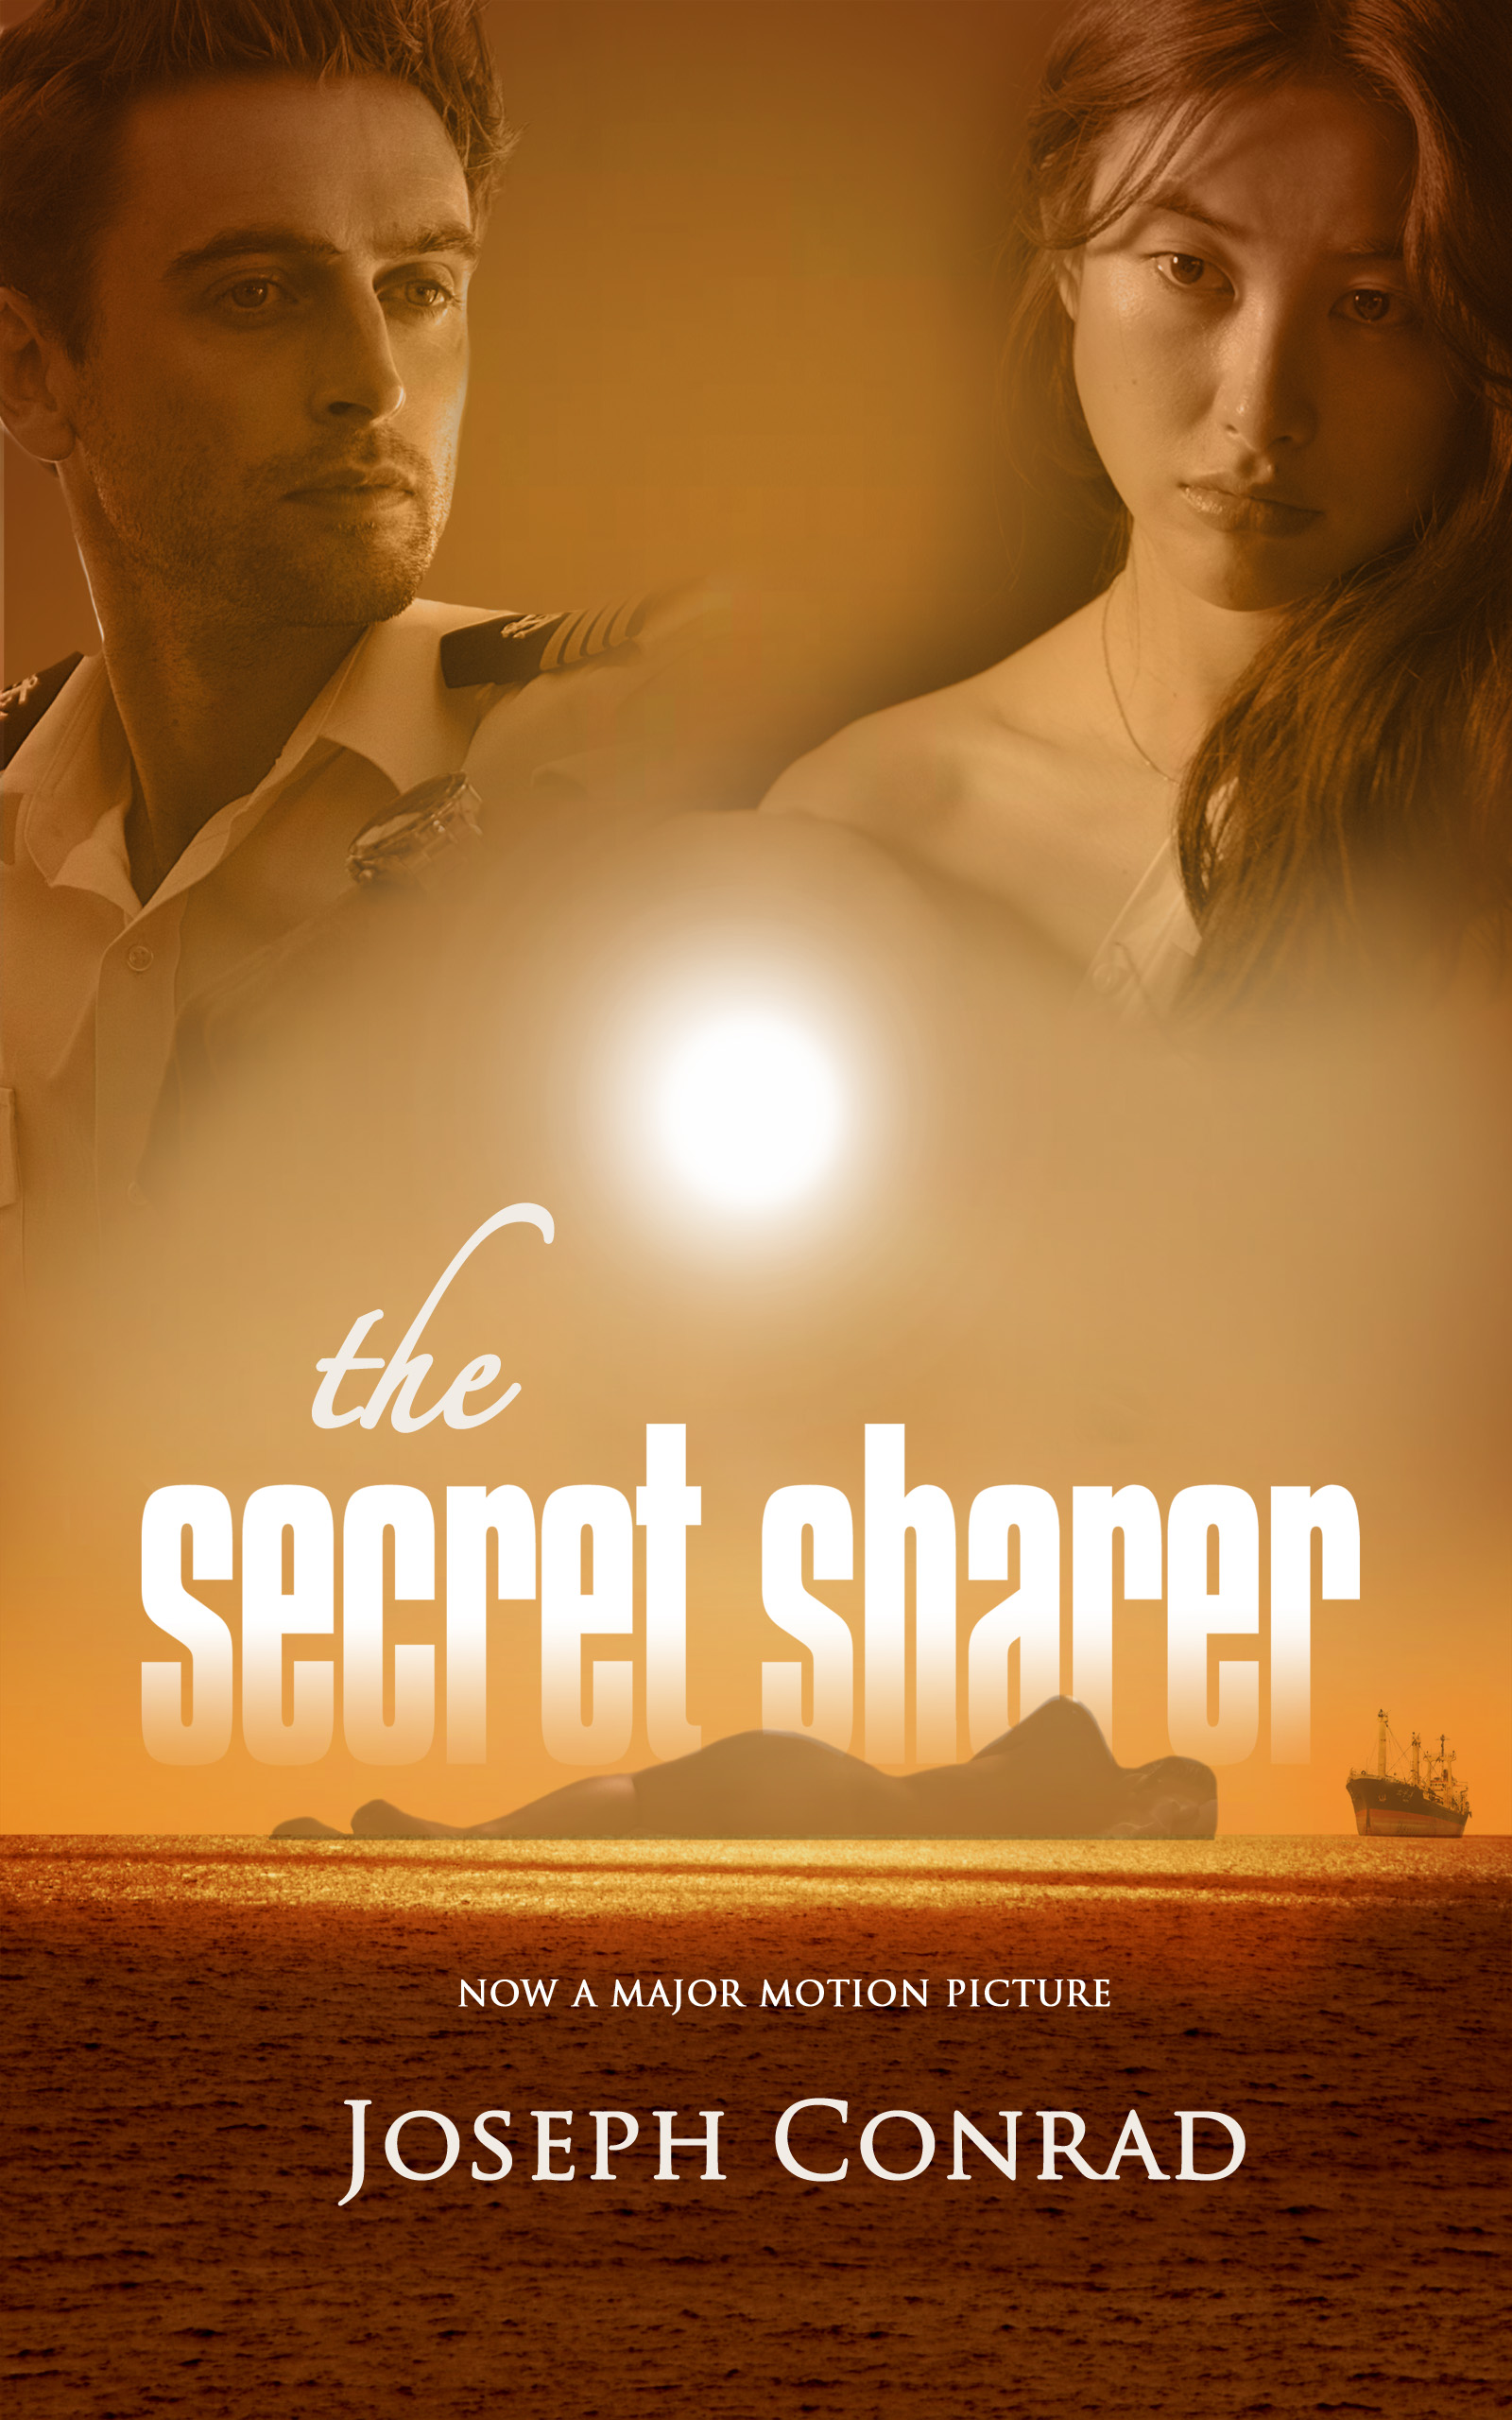 the secret sharer characters